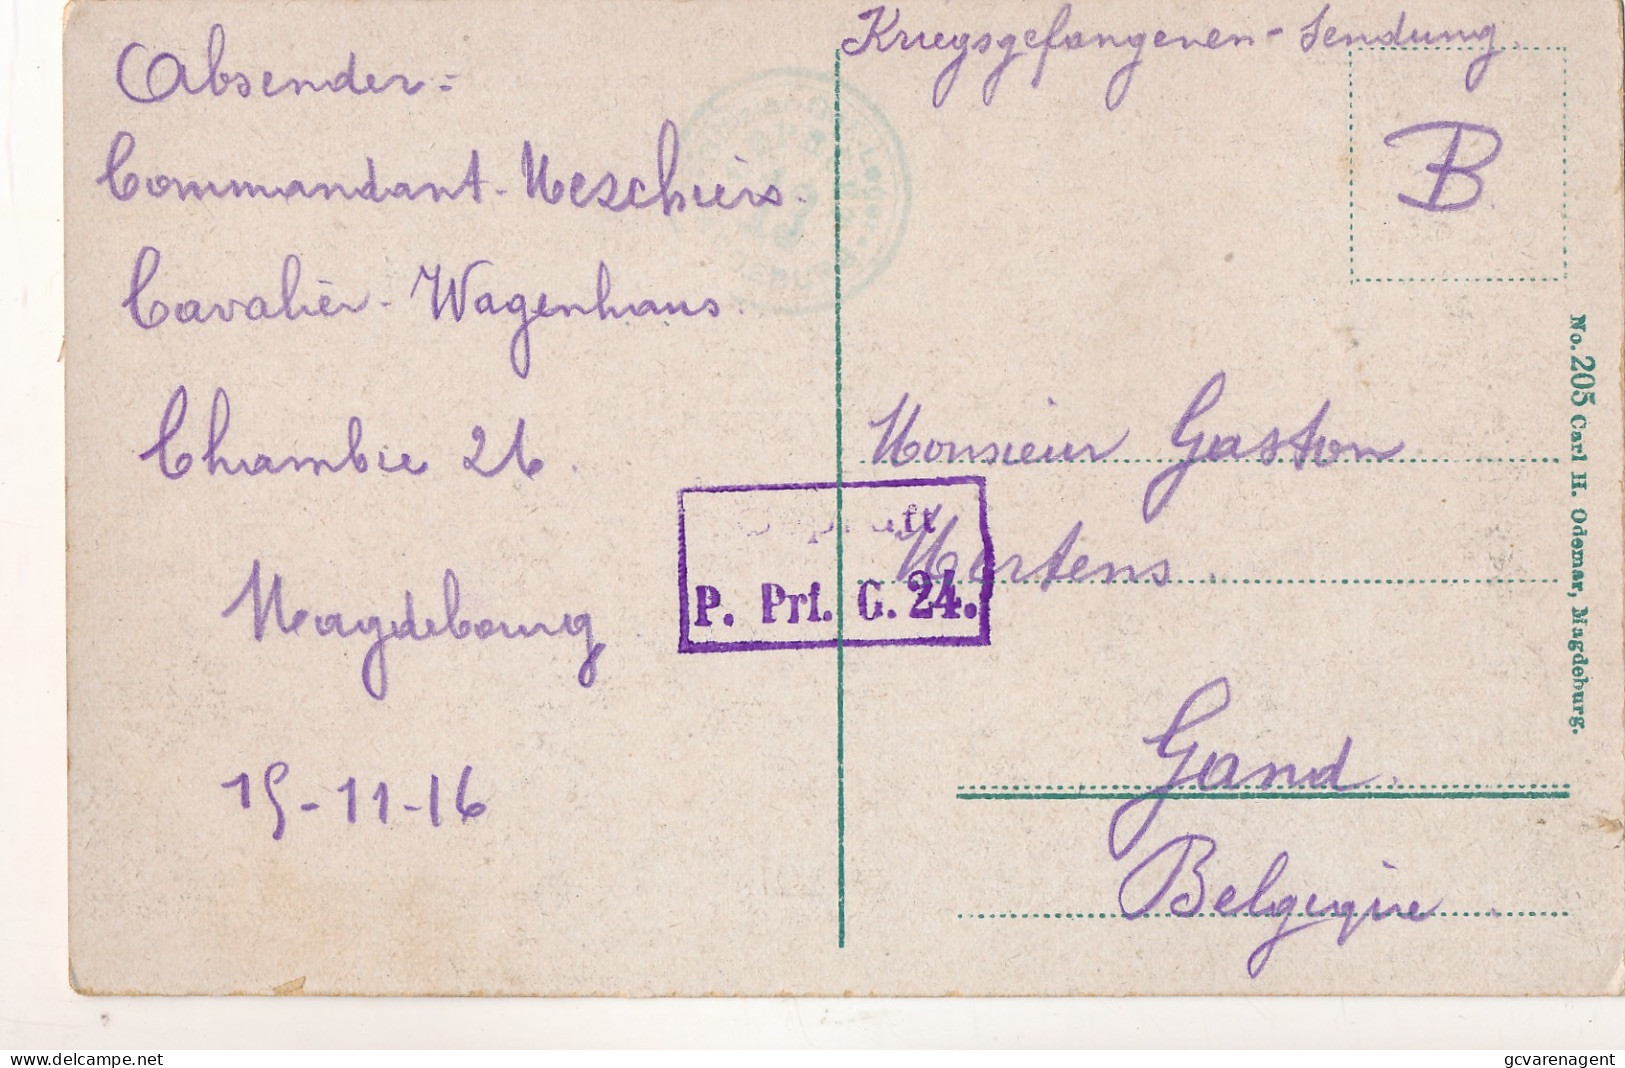 1916  COMMADANT UESCHIERS CAVALIER WAGENHAUS CHAMBRE 26 MAGDEBOURG TO GAND BELGIUM      2  SCANS - Prisonniers